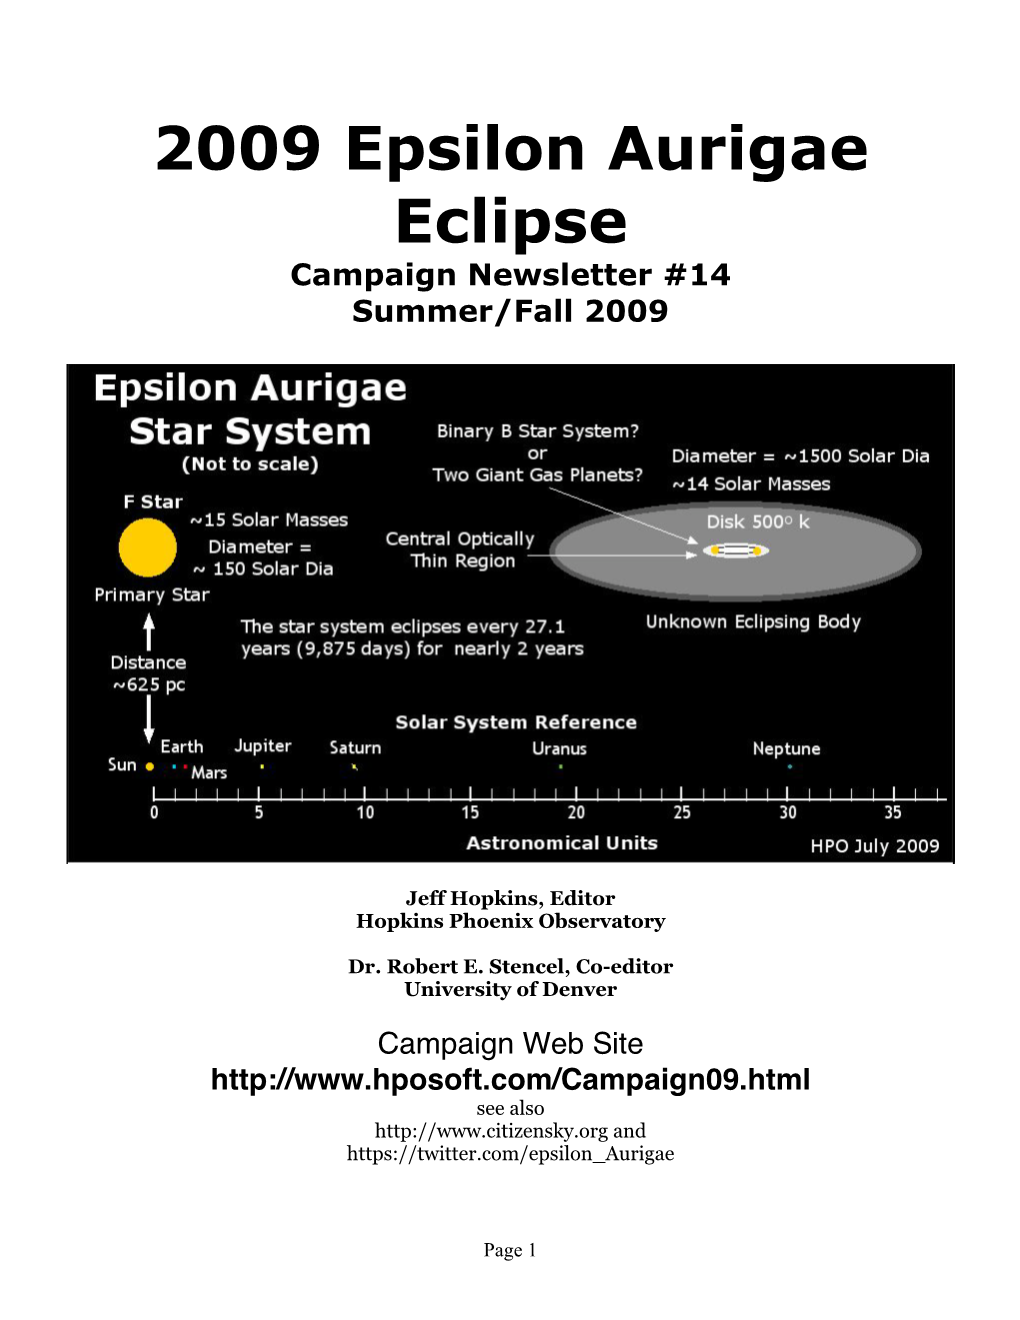 2009 Epsilon Aurigae Eclipse Campaign Newsletter #14 Summer/Fall 2009